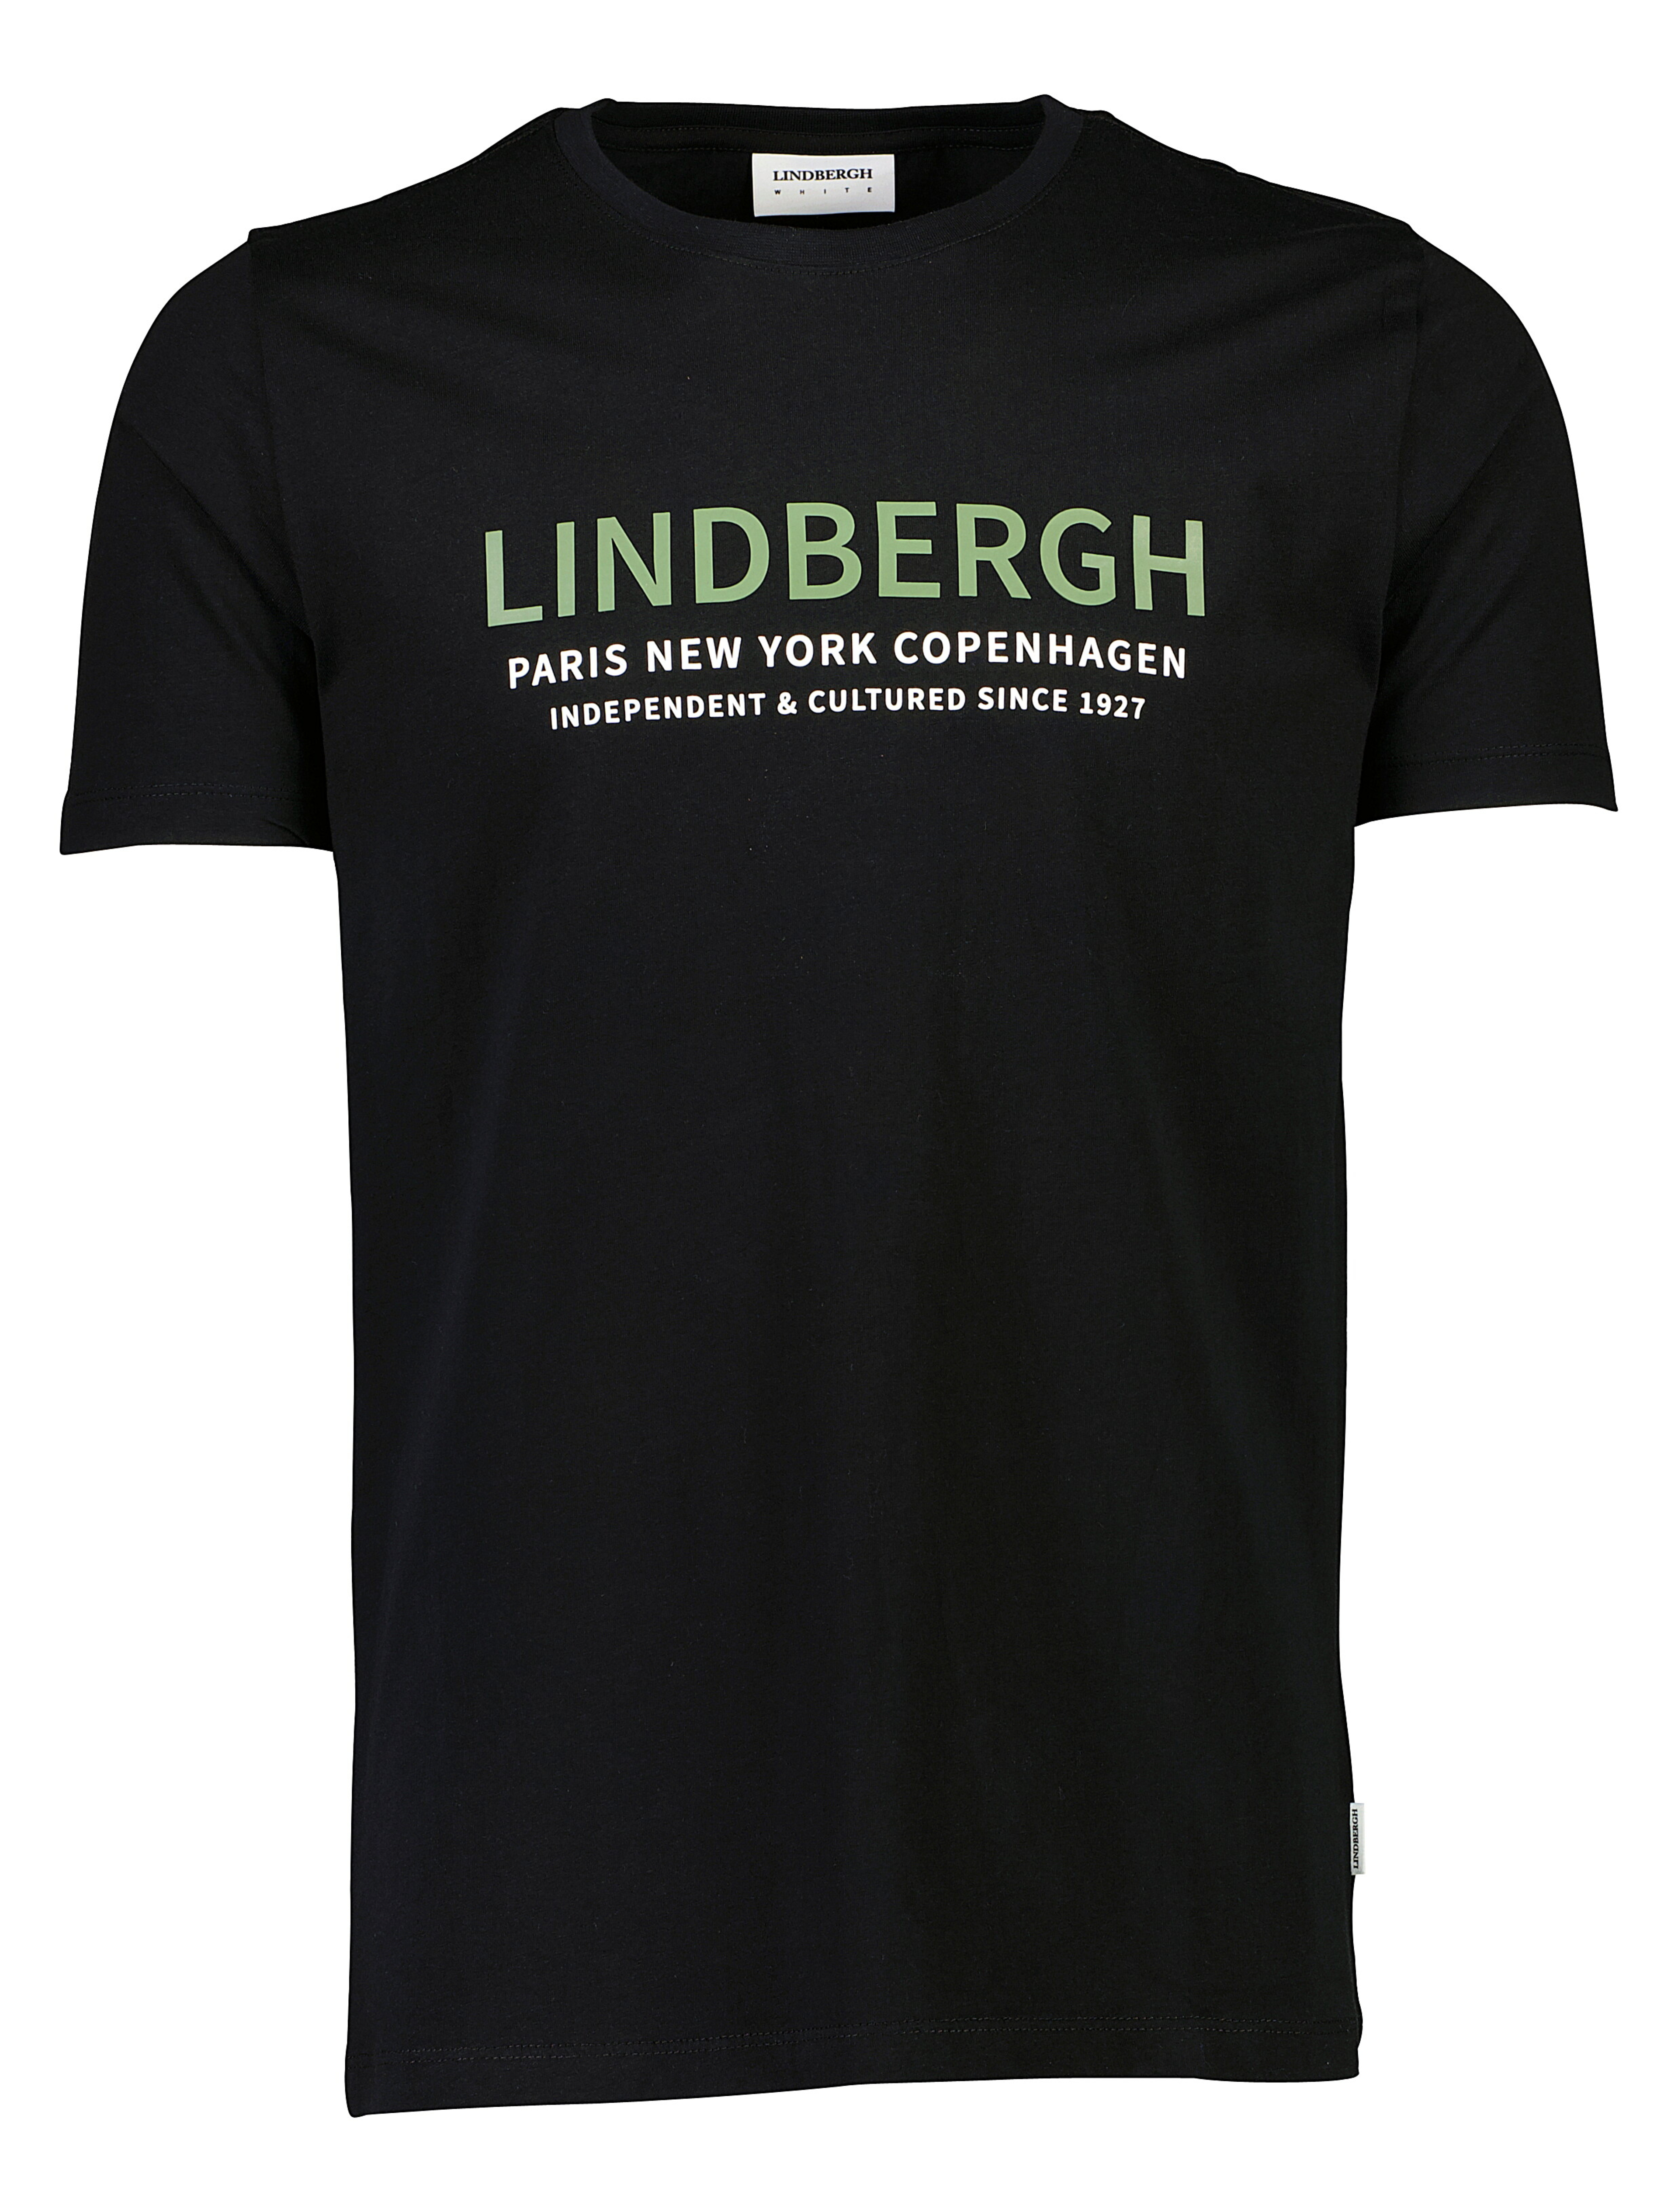 Lindbergh Tee black / black